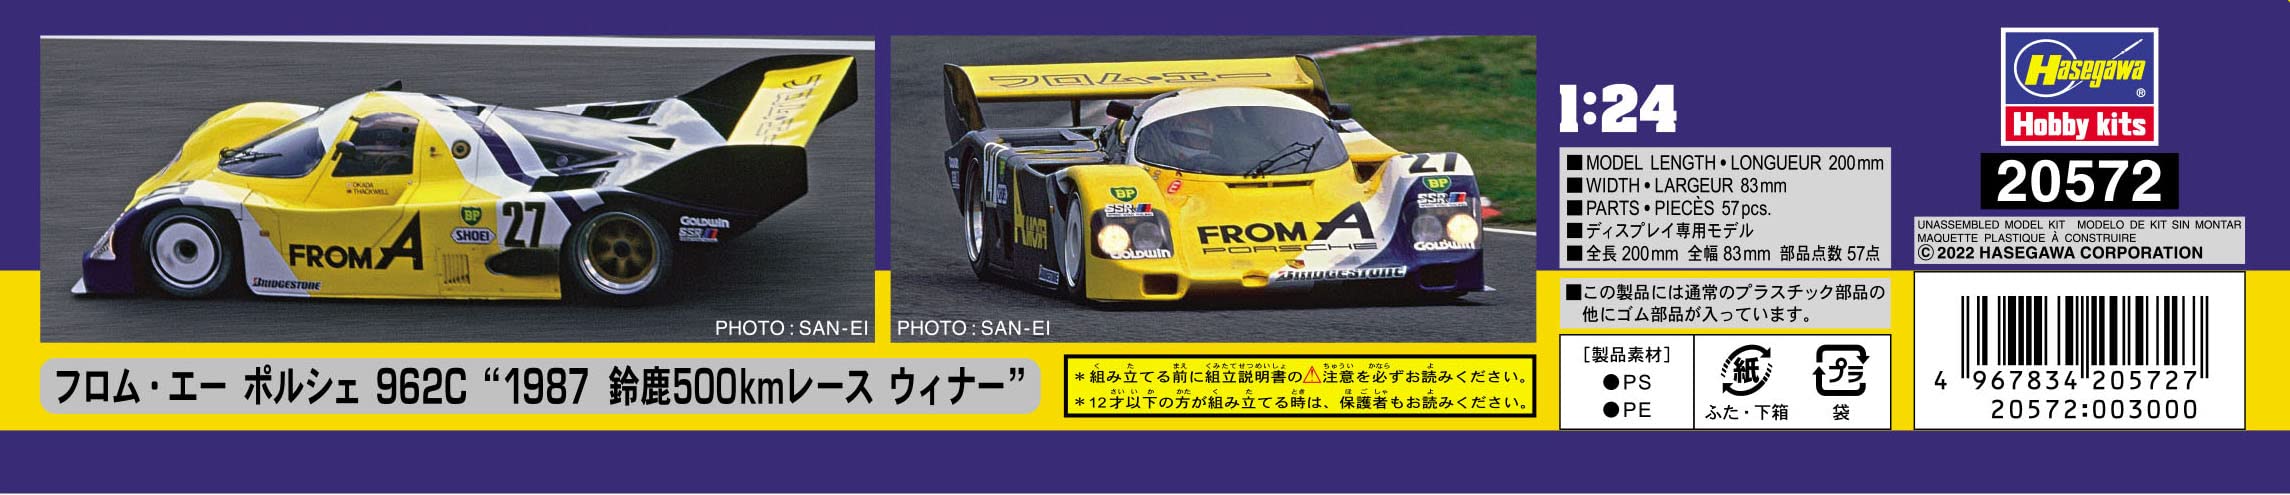 HASEGAWA 1/24 From A Porsche 962C 1987 Suzuka 500Km Race Winner Plastic Model